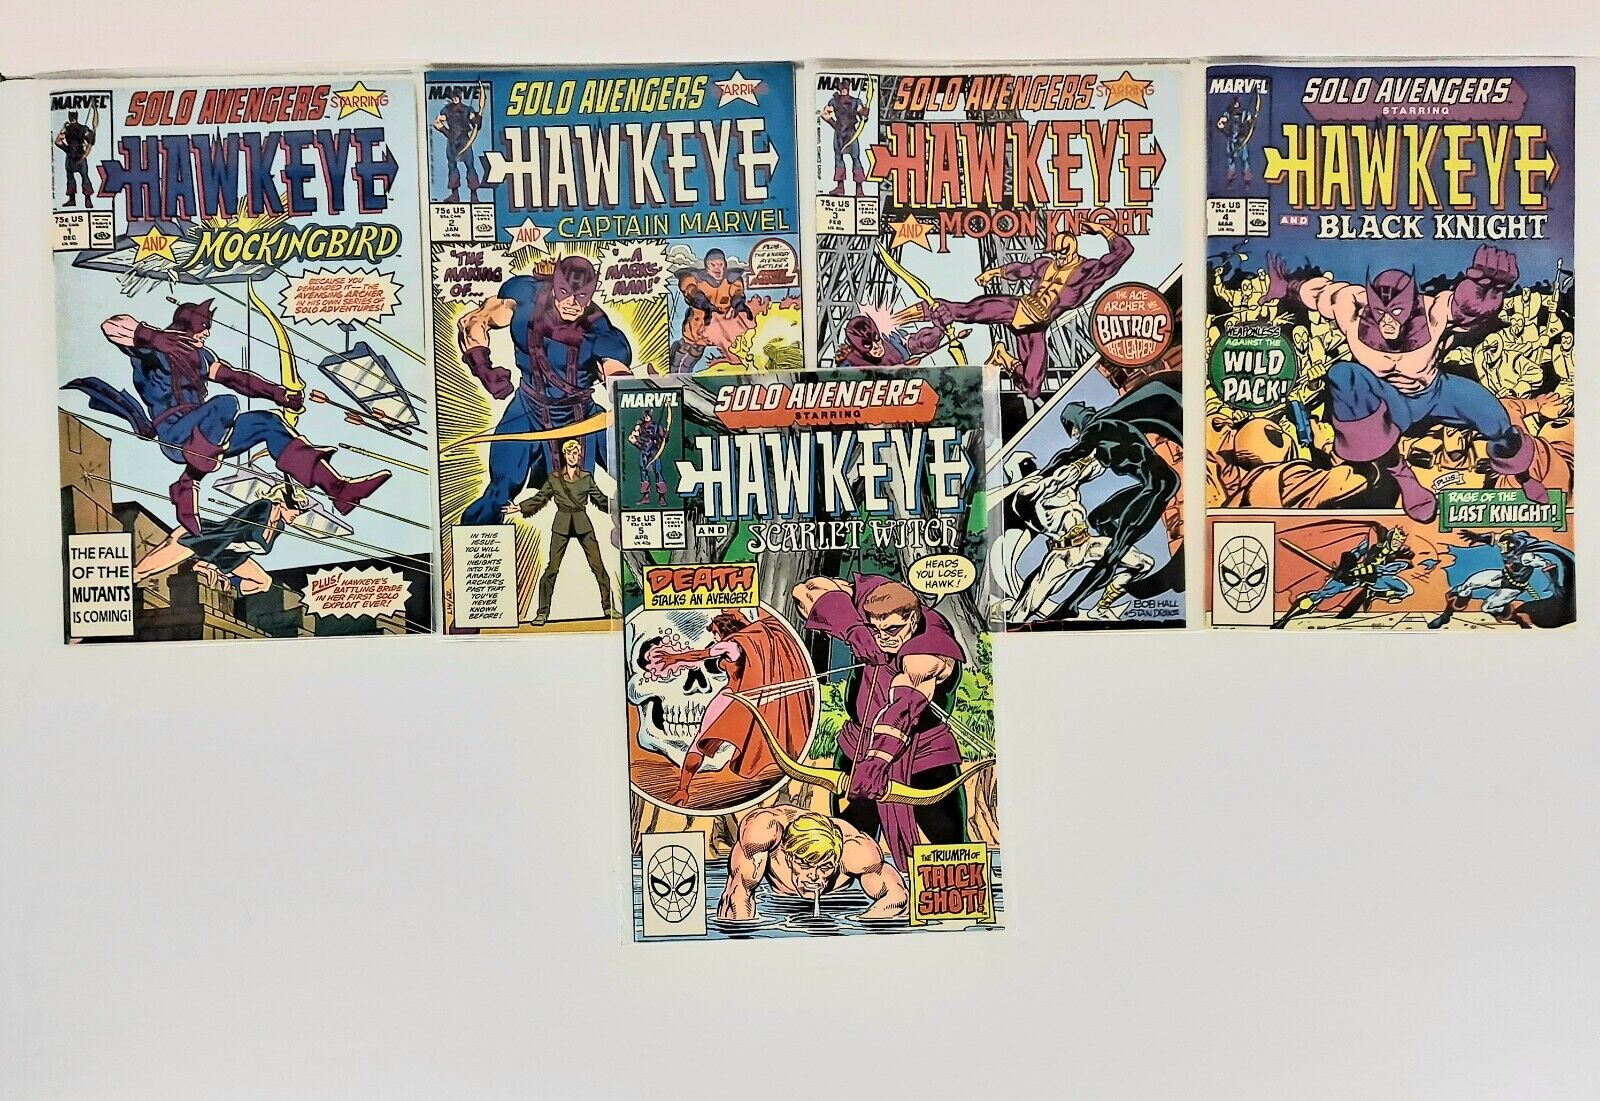 Marvel SOLO AVENGERS HAWKEYE #1-5 1987 with MOCKINGBIRD Original Owner 